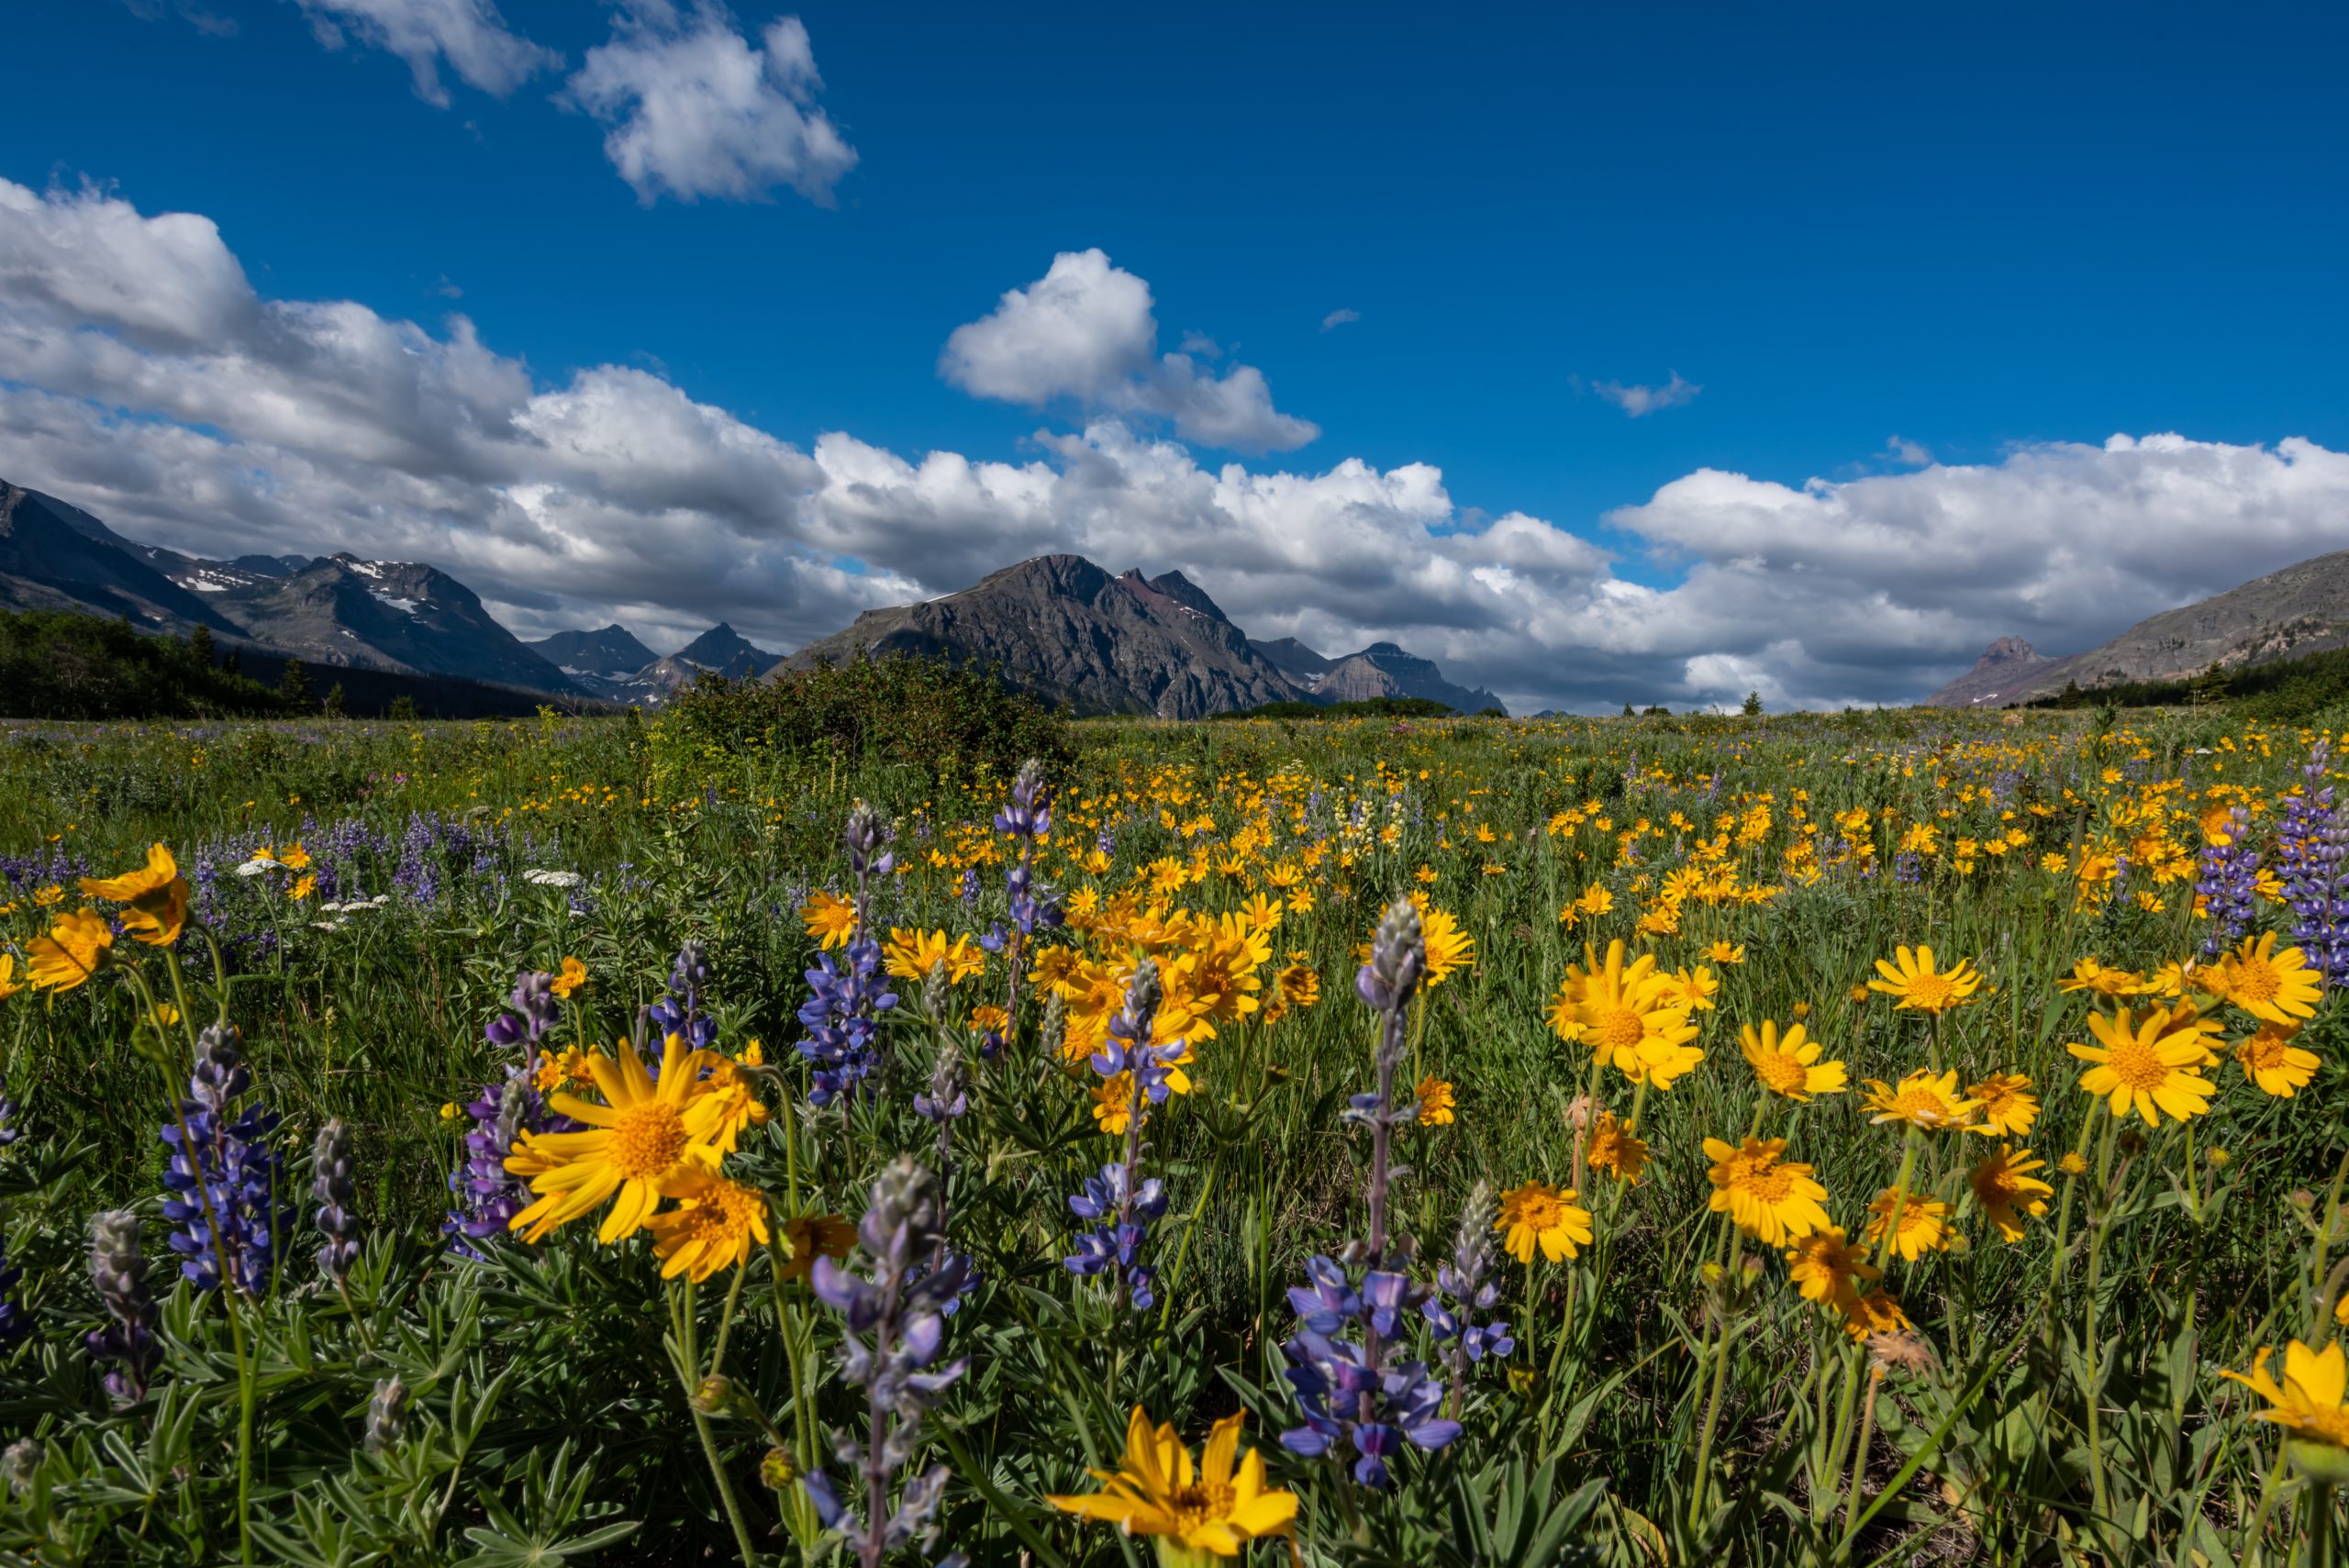 Yellow Daisies in Wildflower Field in Montana Wilderness